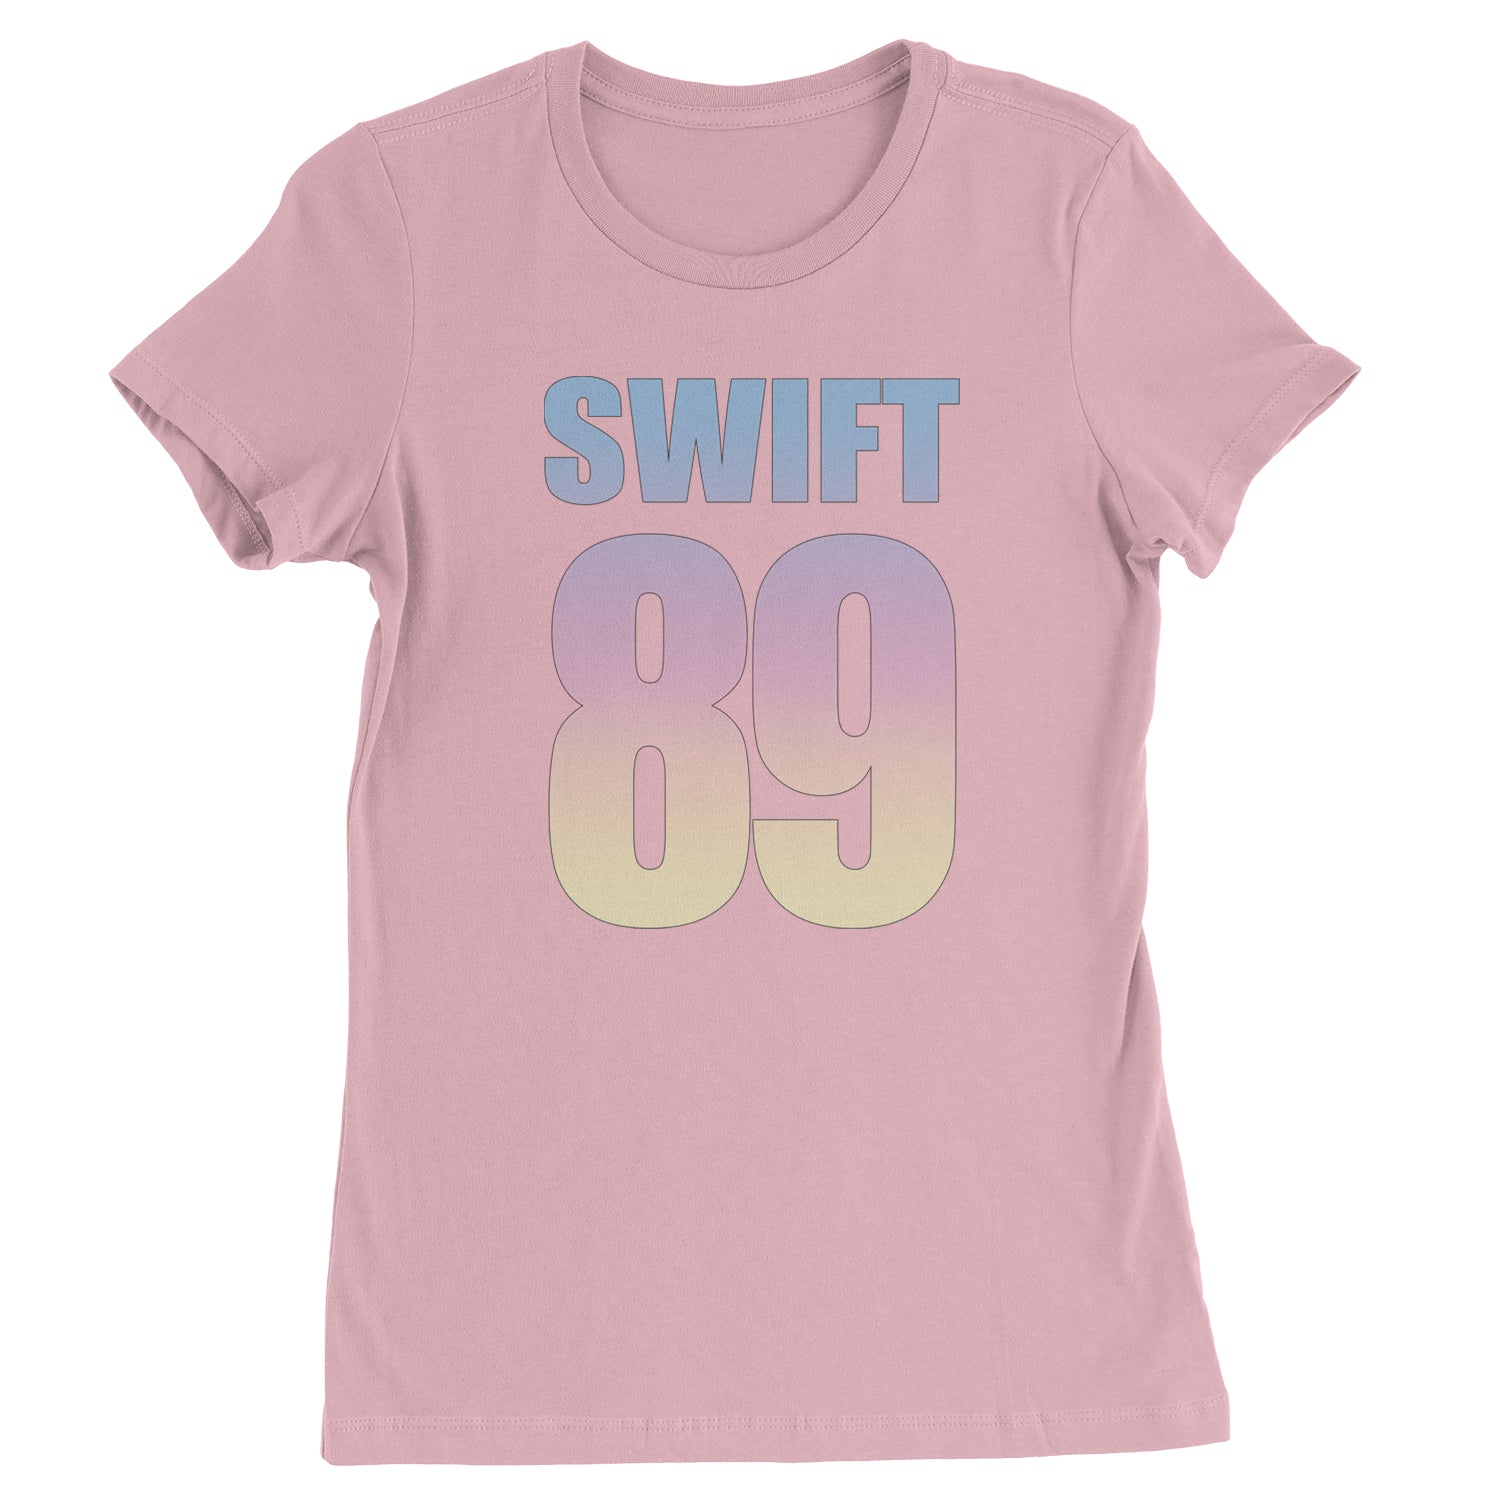 Lover Era Swift 89 Birth Year Music Fan Womens T-shirt